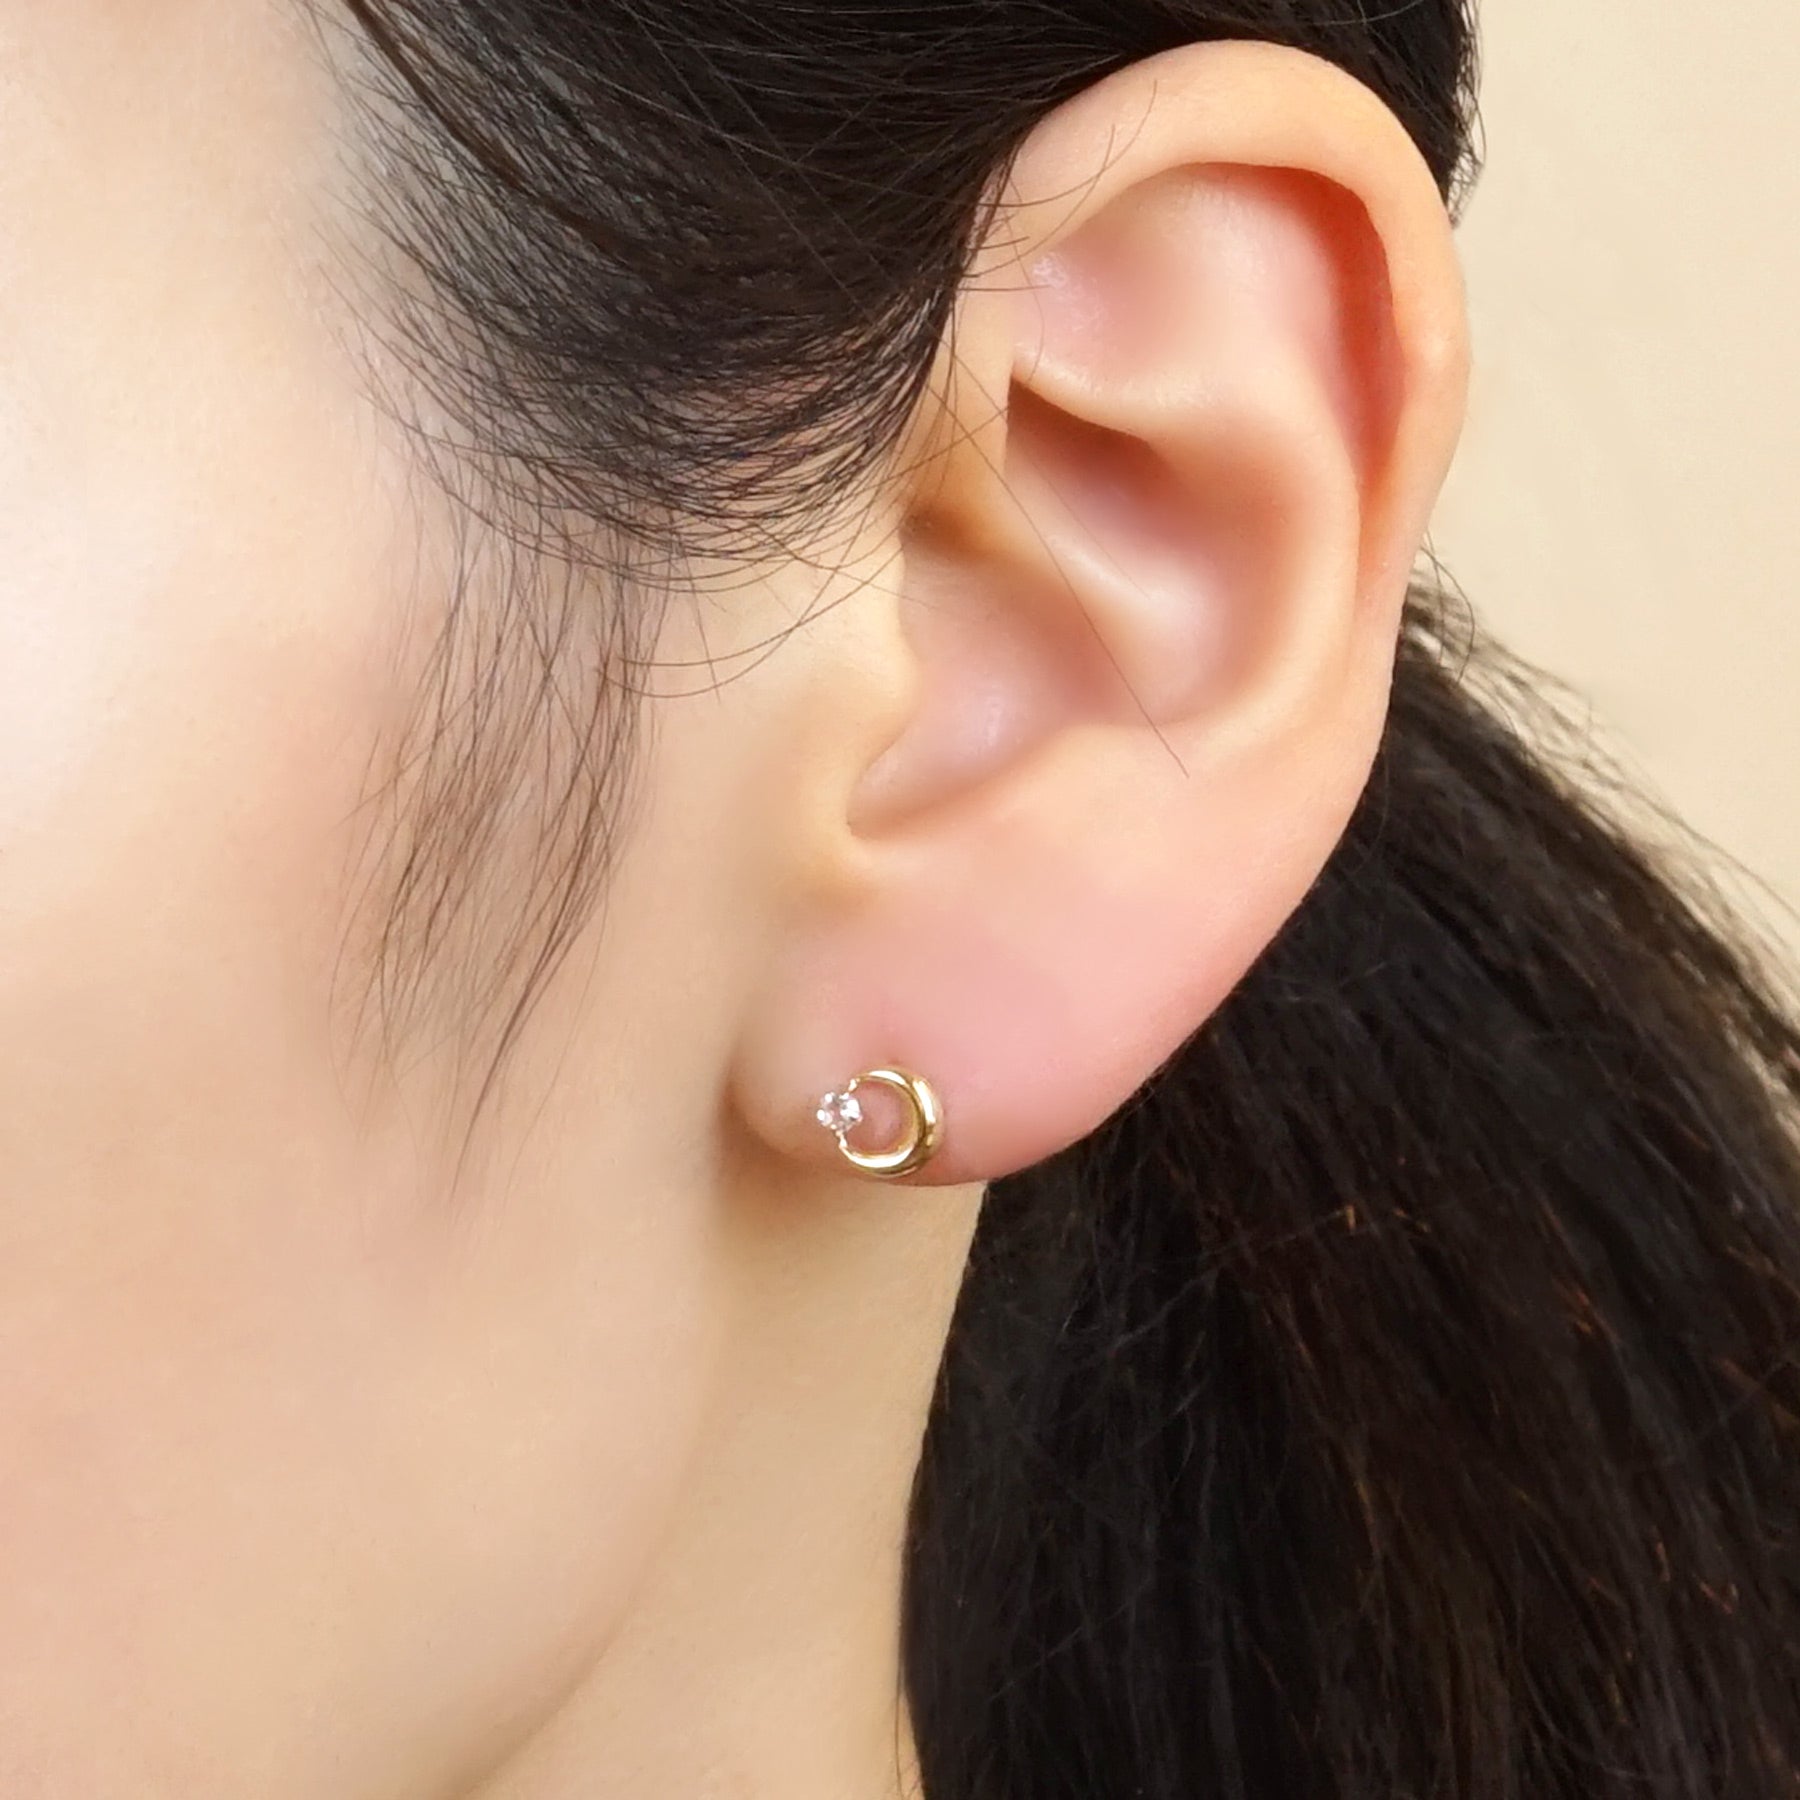 18K/10K Yellow Gold Circle Moon Stud Earrings - Model Image